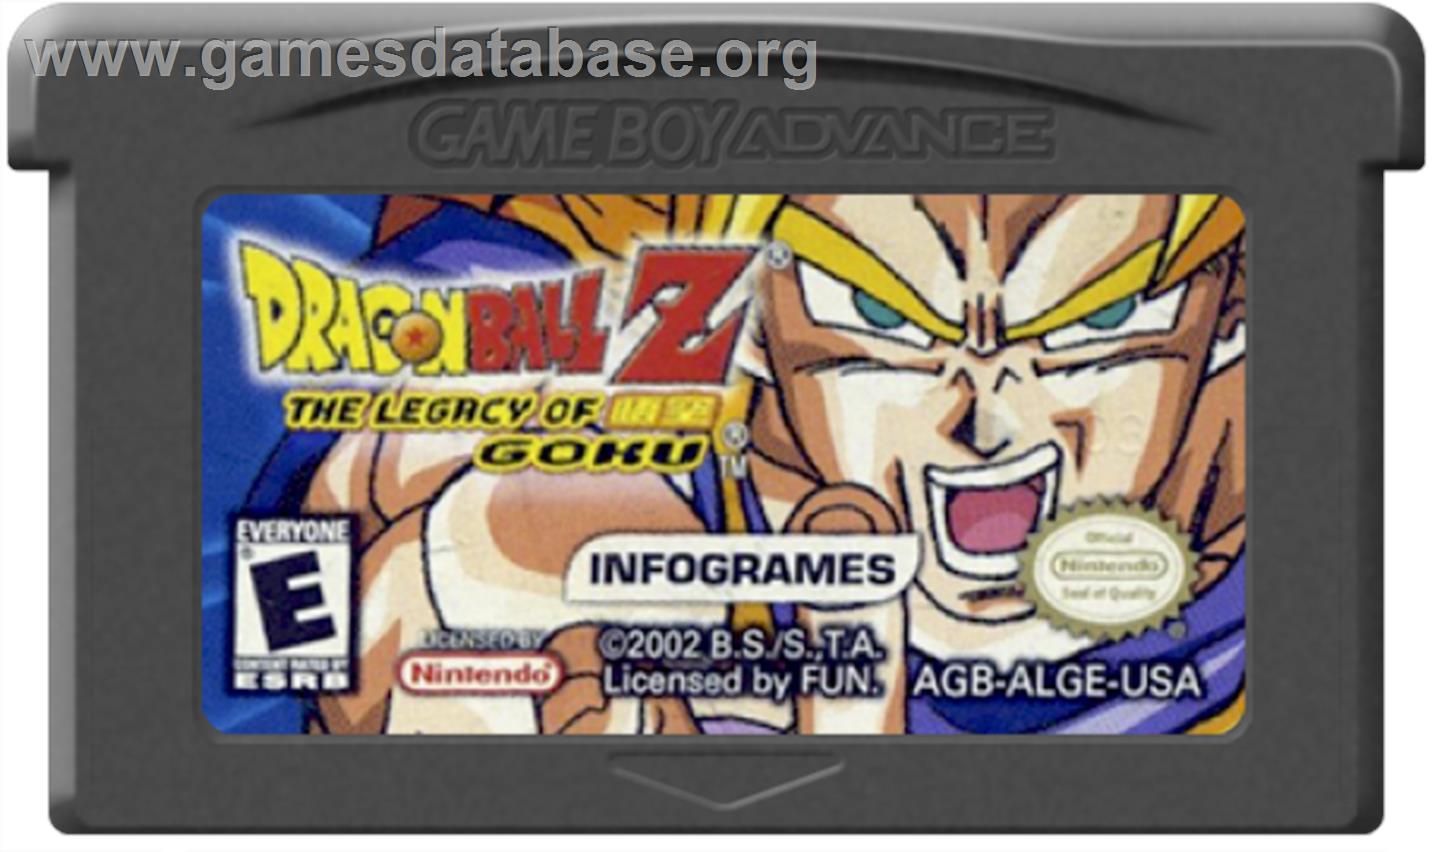 Dragonball Z: The Legacy of Goku - Nintendo Game Boy Advance - Artwork - Cartridge